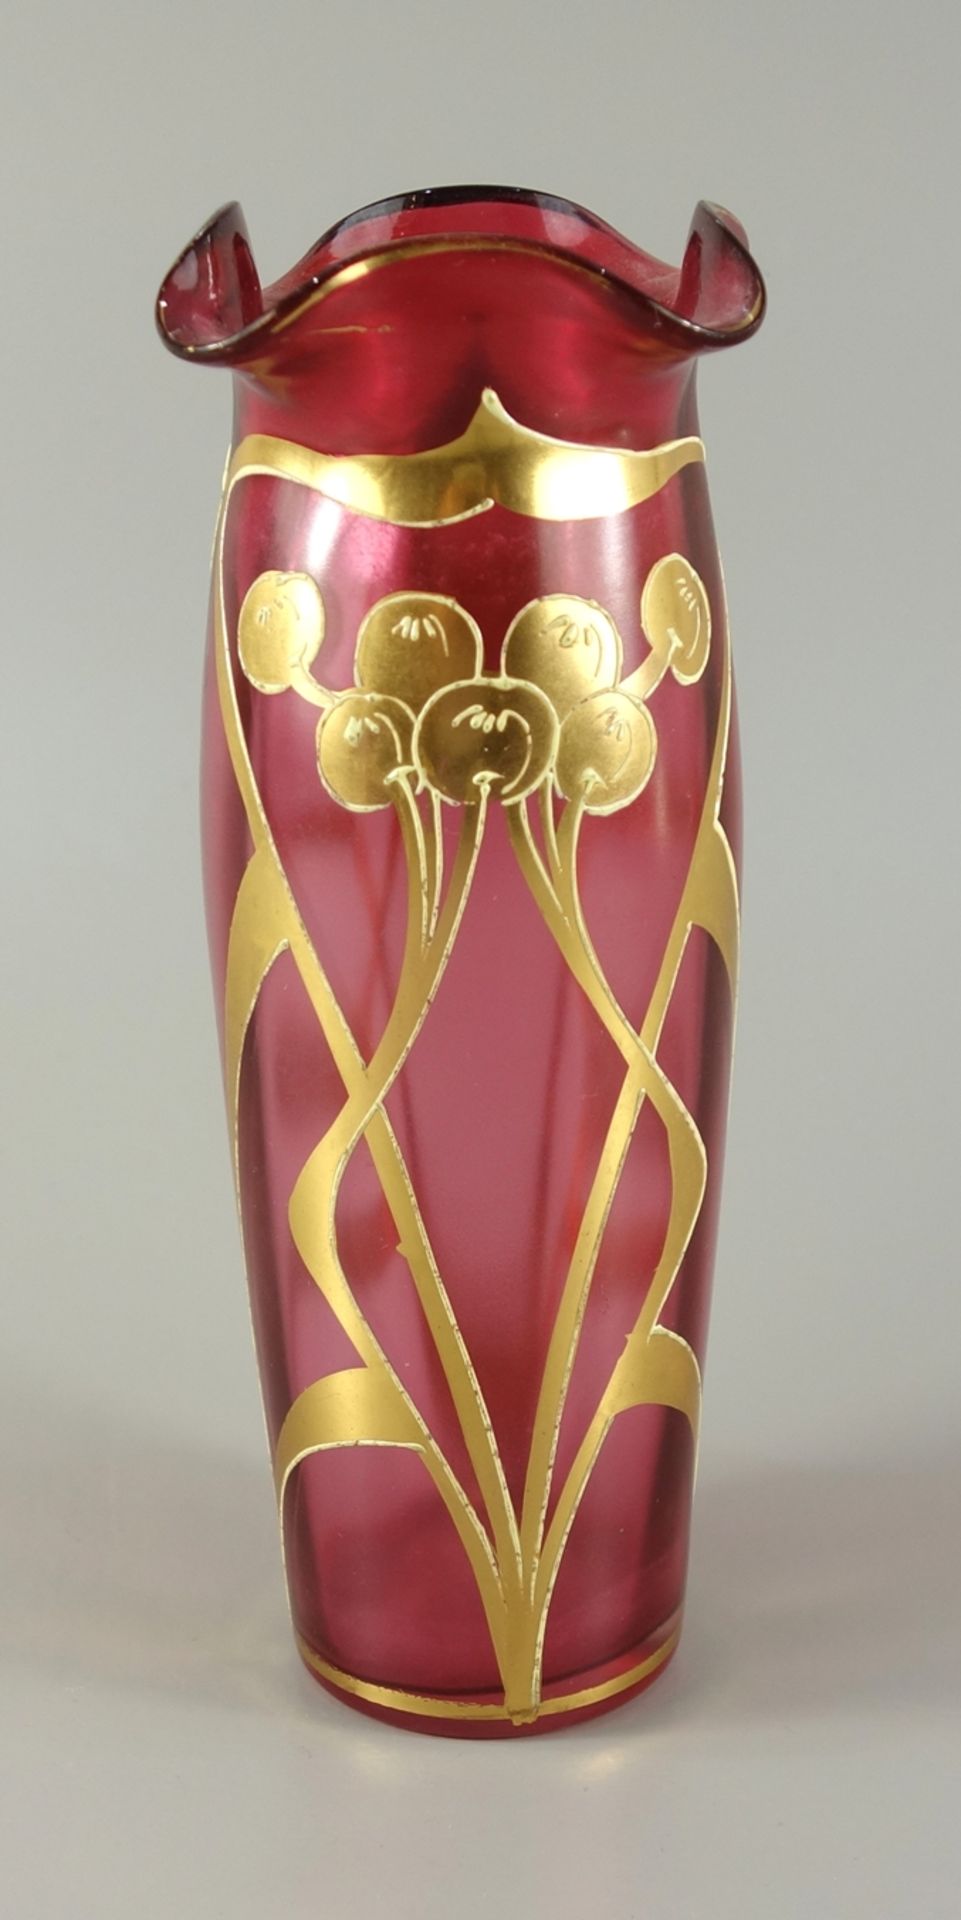 Vase, Jugendstil, Süddeutschland, um 1900, rosa Glas mit floralem Golddekor, gewellte Mündung,